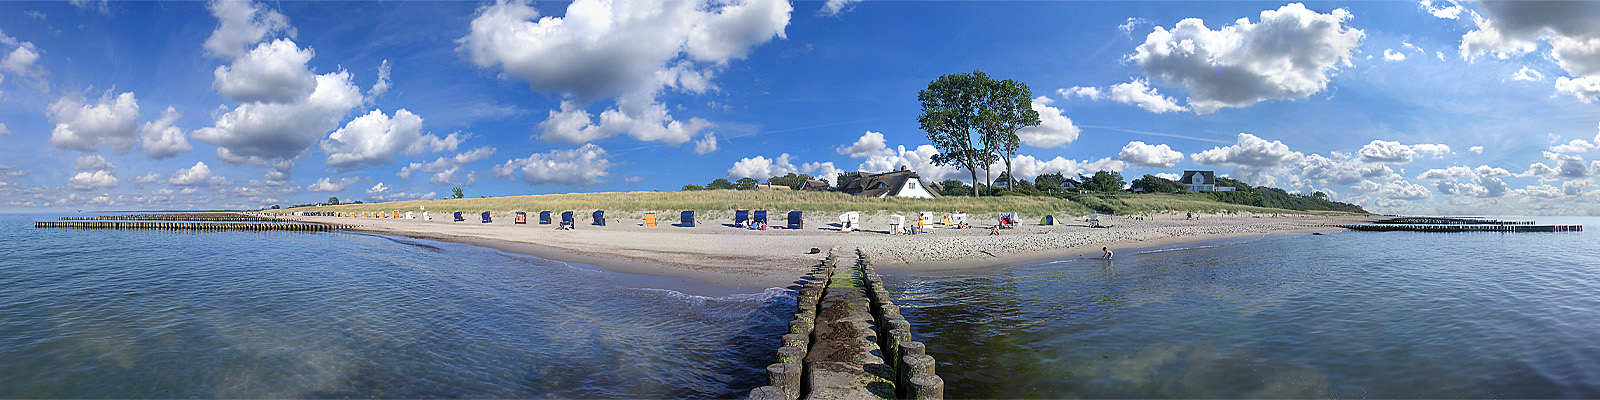 Panorama: Ahrenshoop Buhne - Motivnummer: fdz-ahr-04